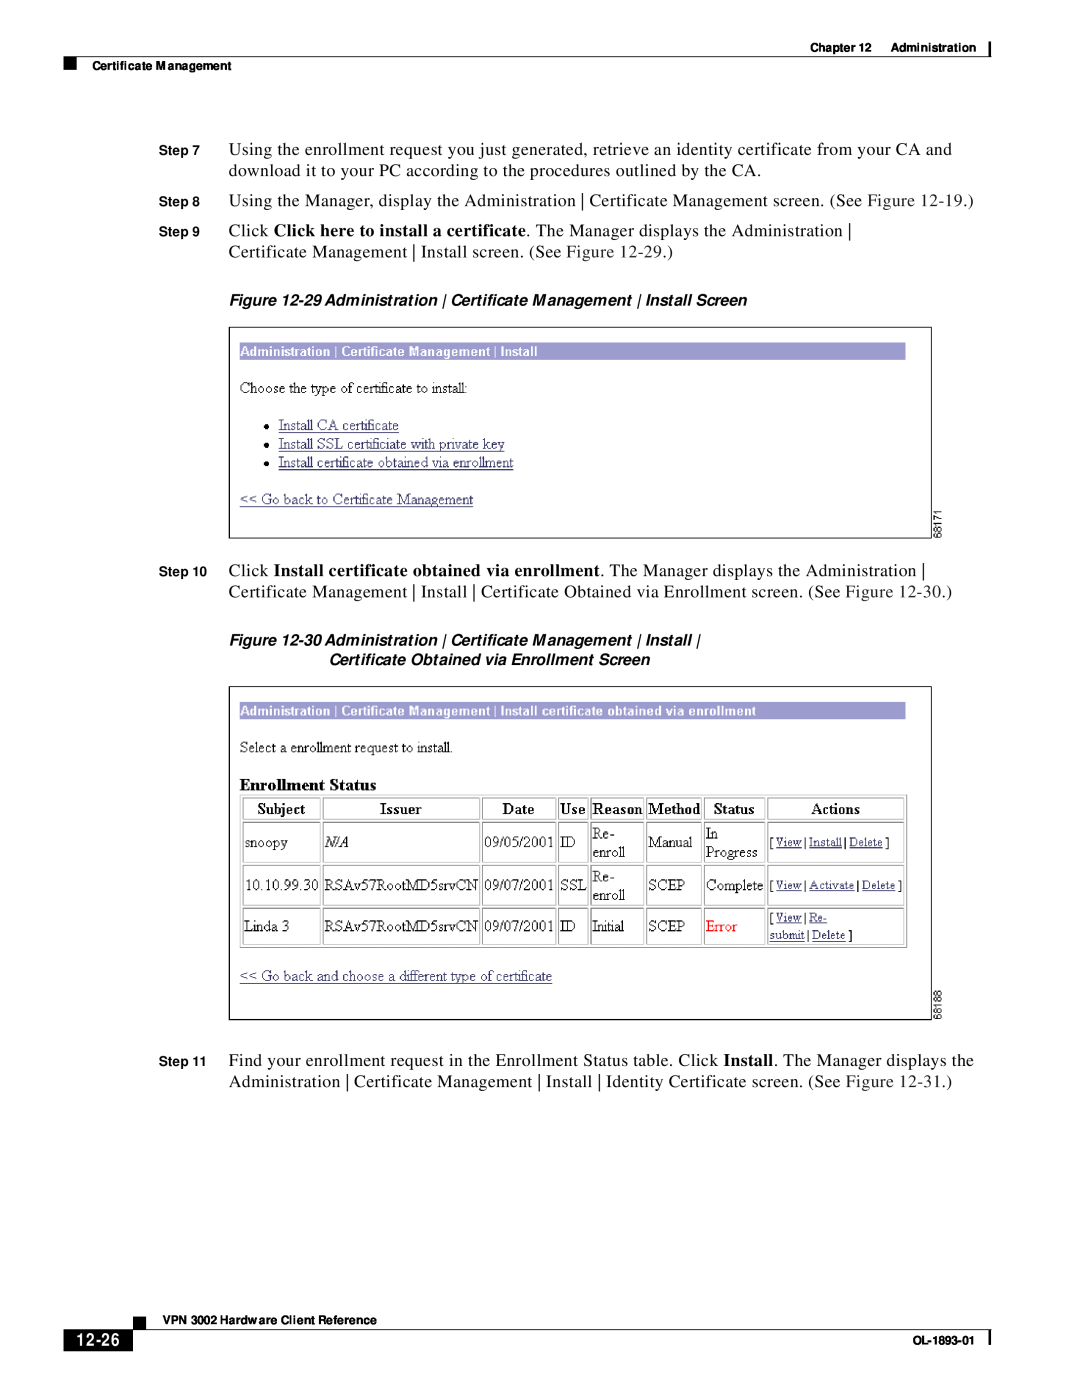 Cisco Systems VPN 3002 manual 12-26, Certificate Obtained via Enrollment Screen 